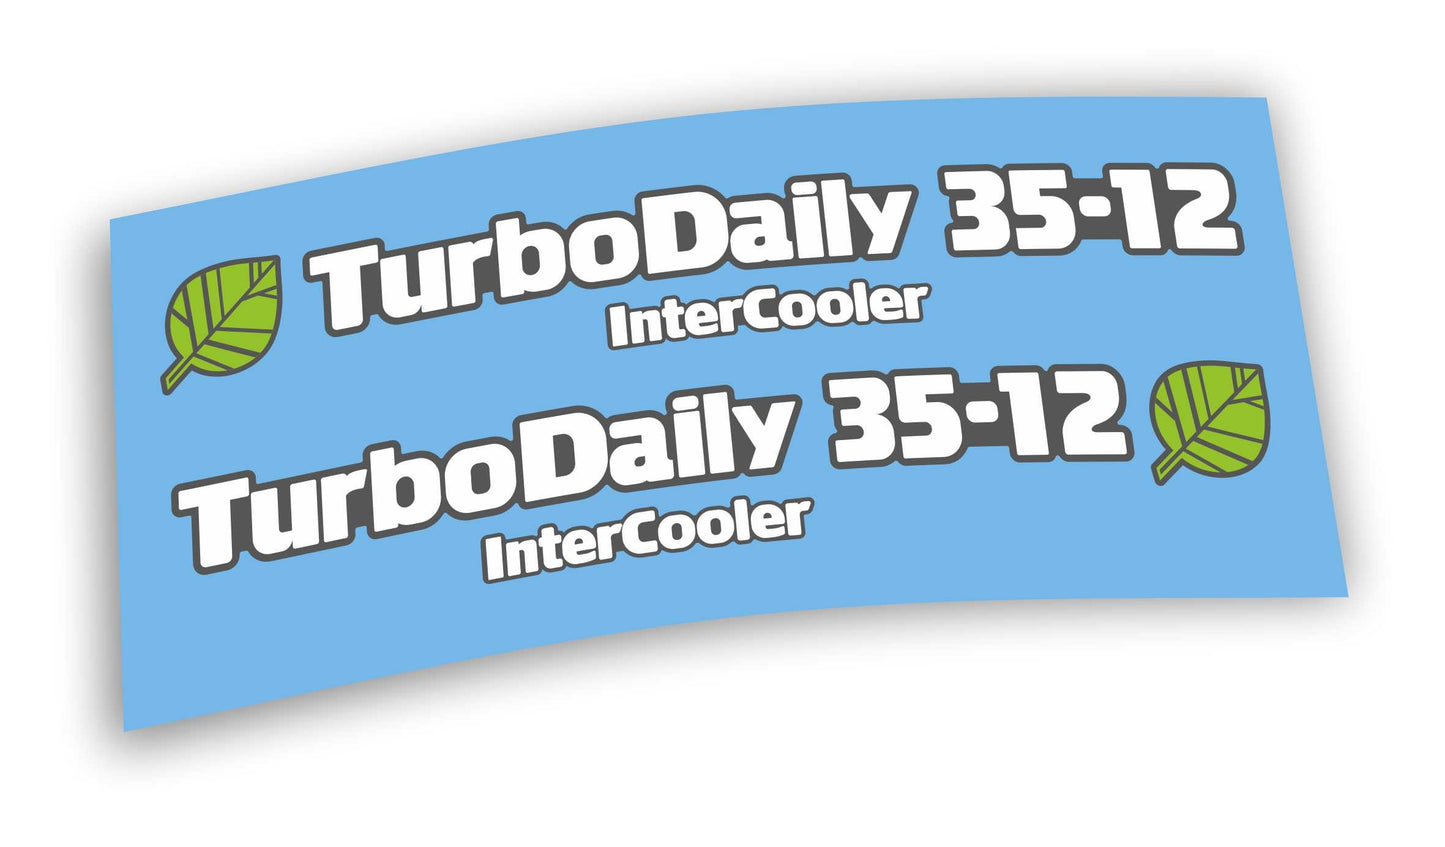 Adesivi iveco turbo daily 3512 intercooler